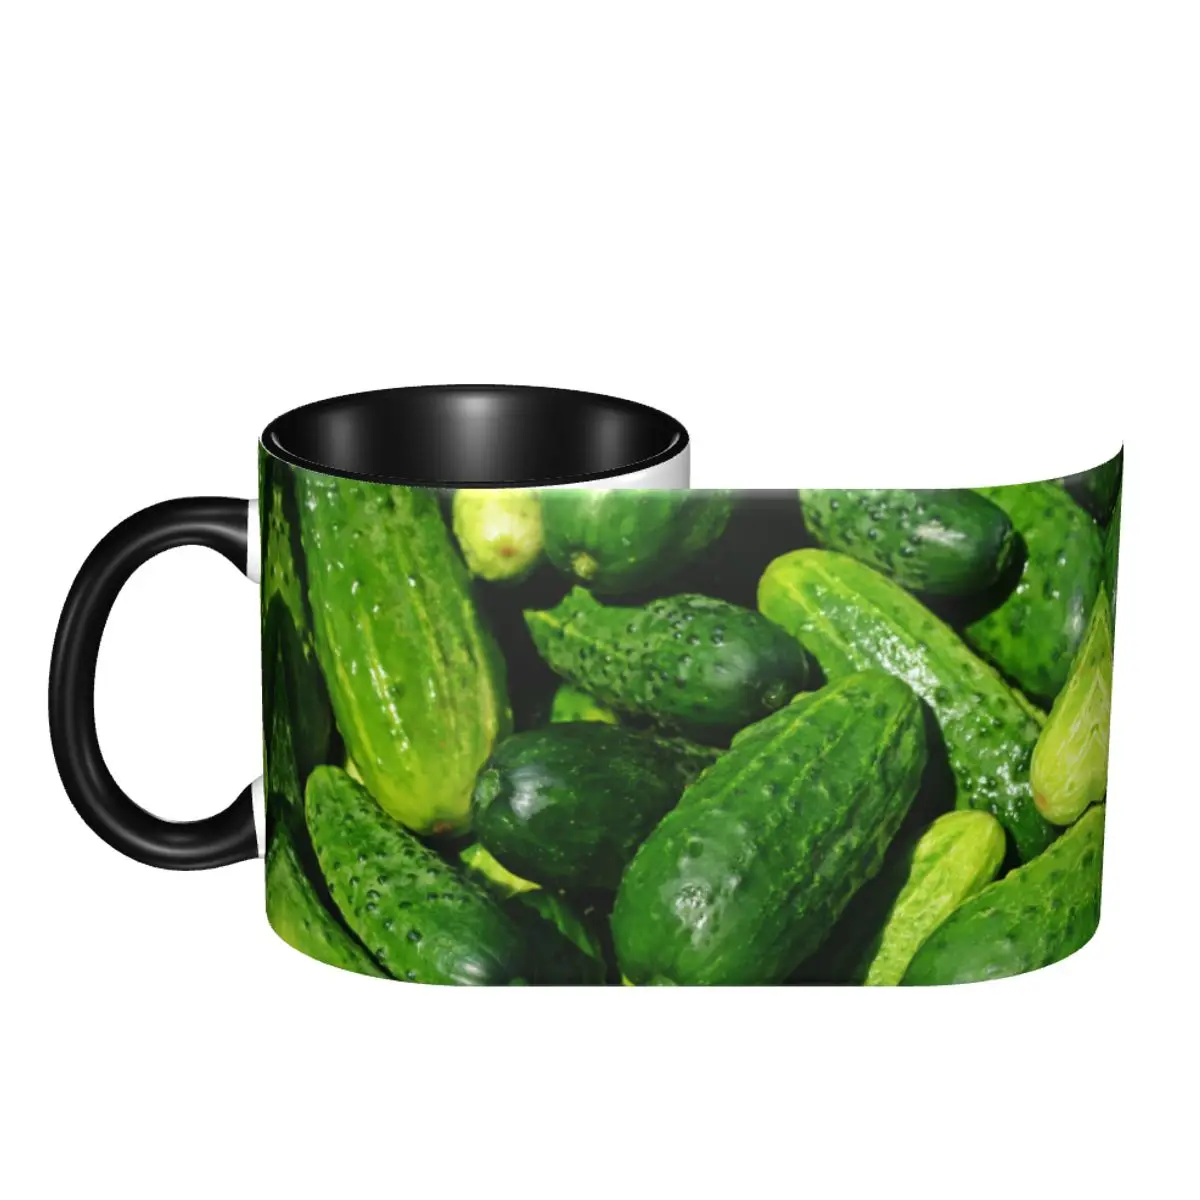 

Cucumbers Cute Cups Mugs Print Mugs Food Party Funny Novelty tea cups